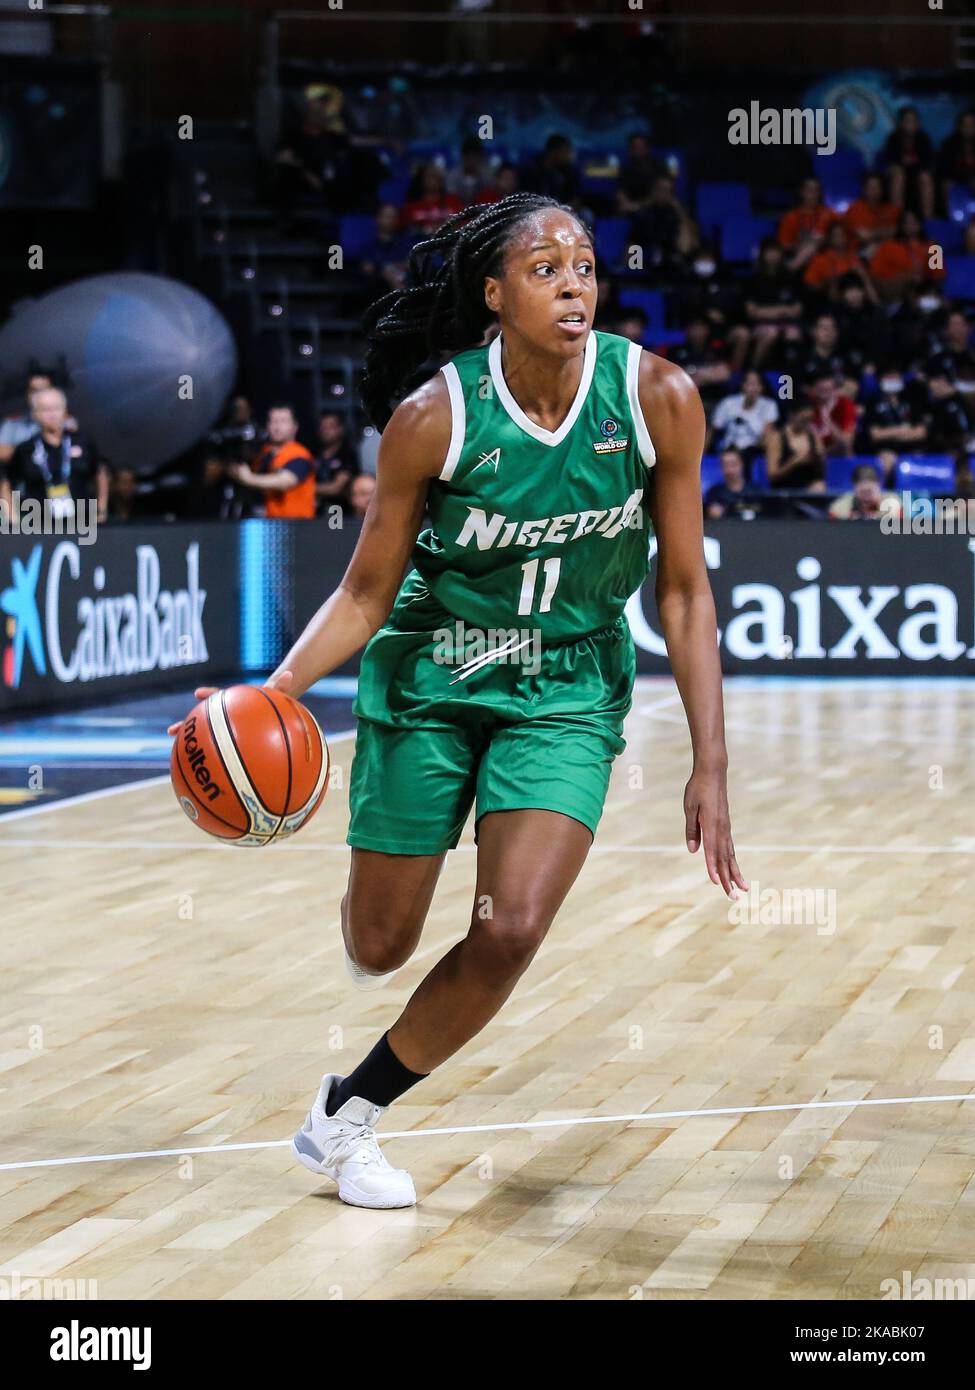 Spain, Tenerife, September 28, 2018: Nigerian basketball player Adaora Elonu in action during the FIBA Women's Basketball World Cup Stock Photo